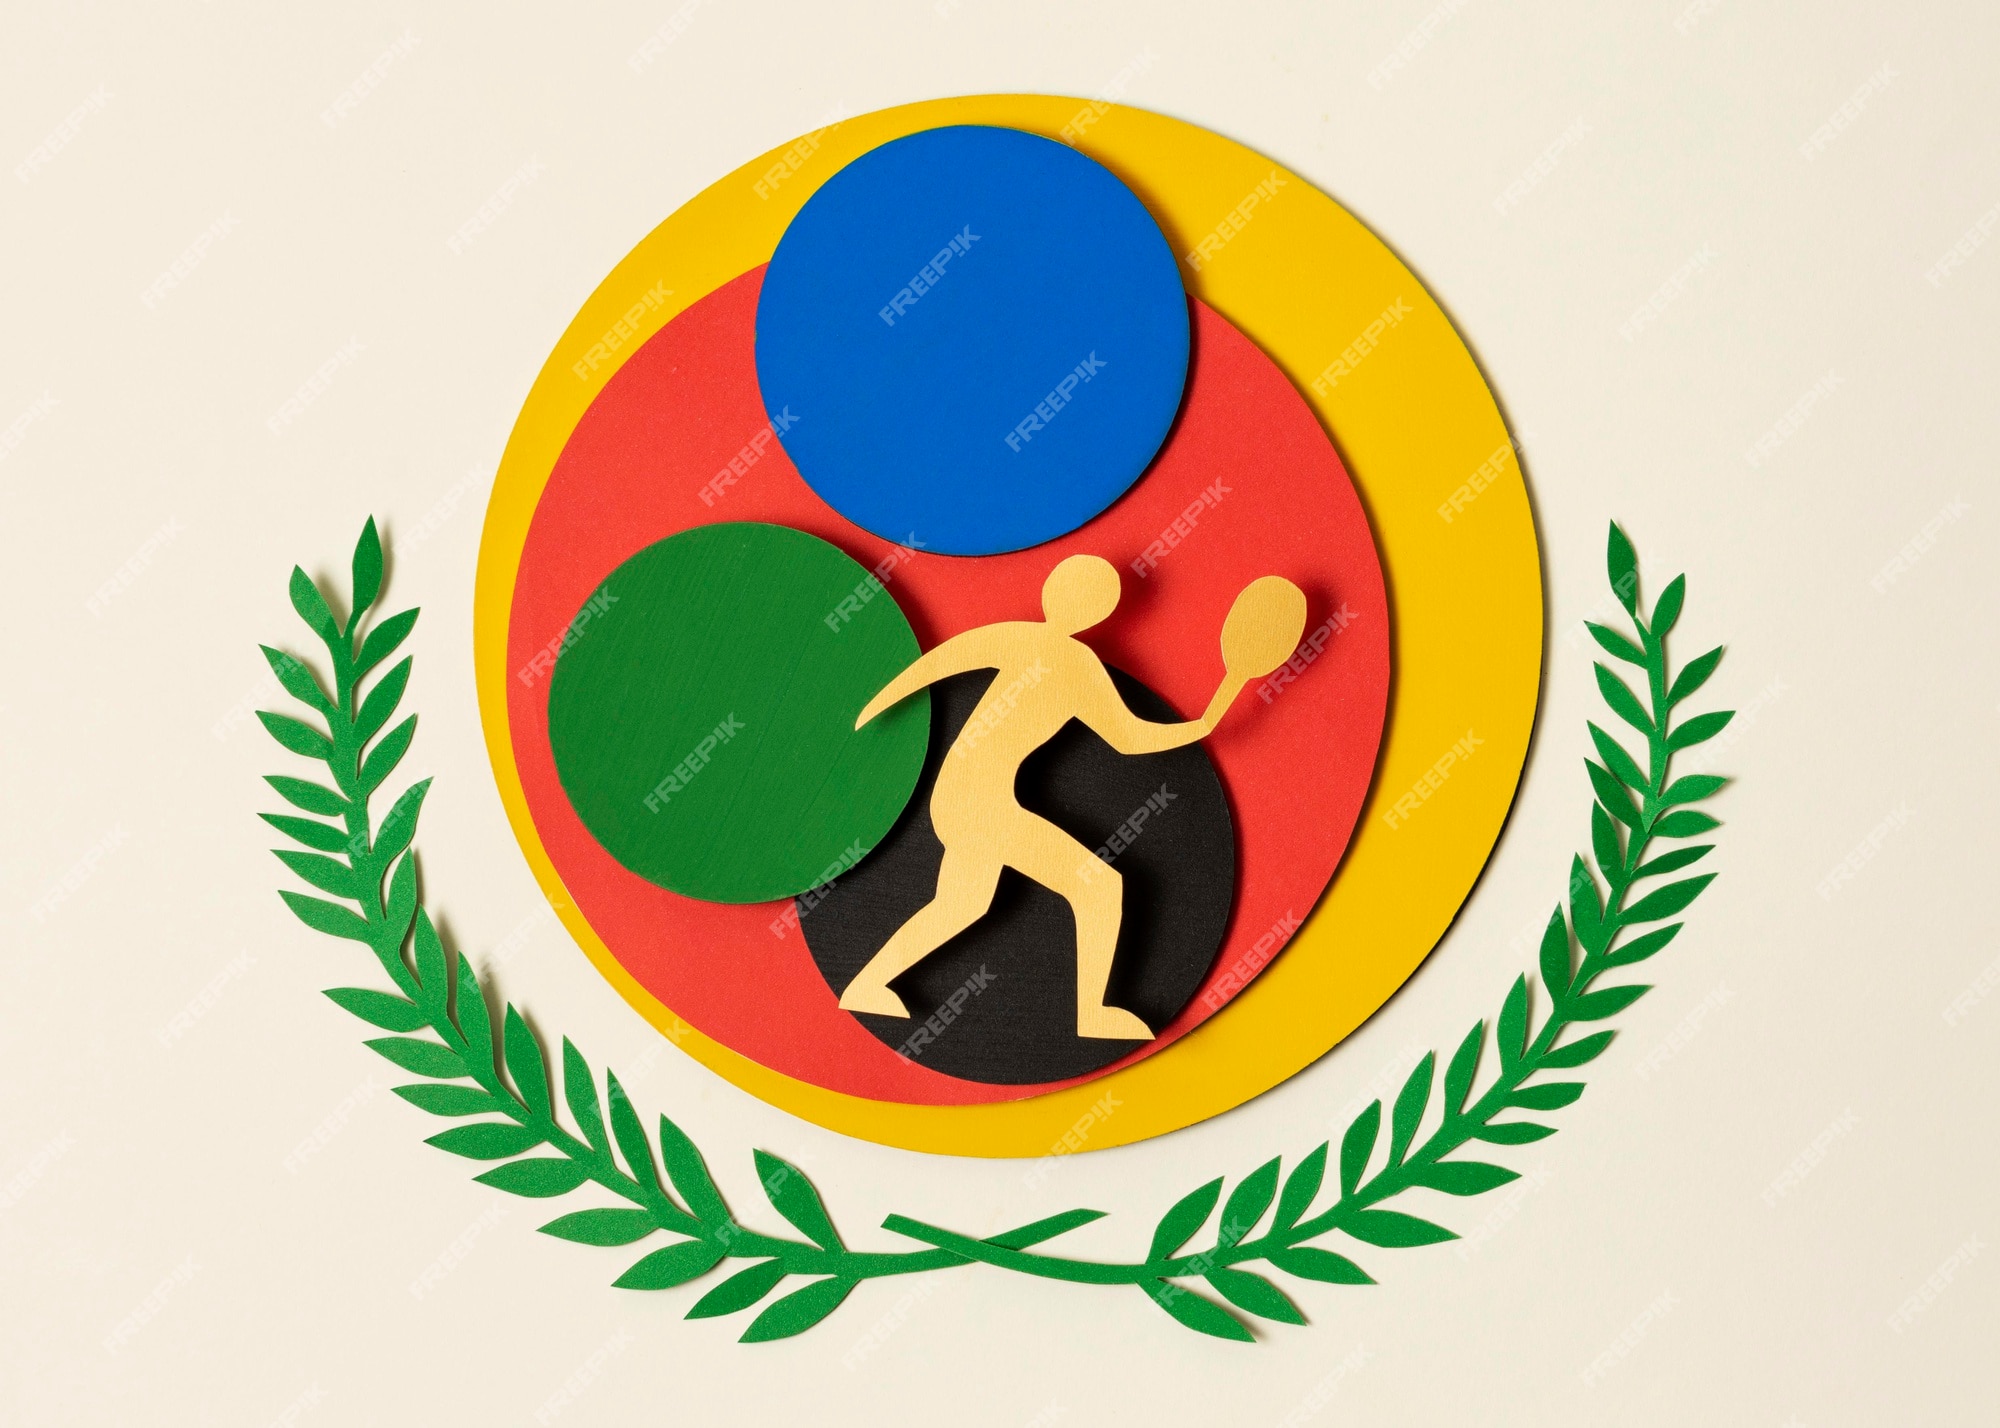 physical education logo designs